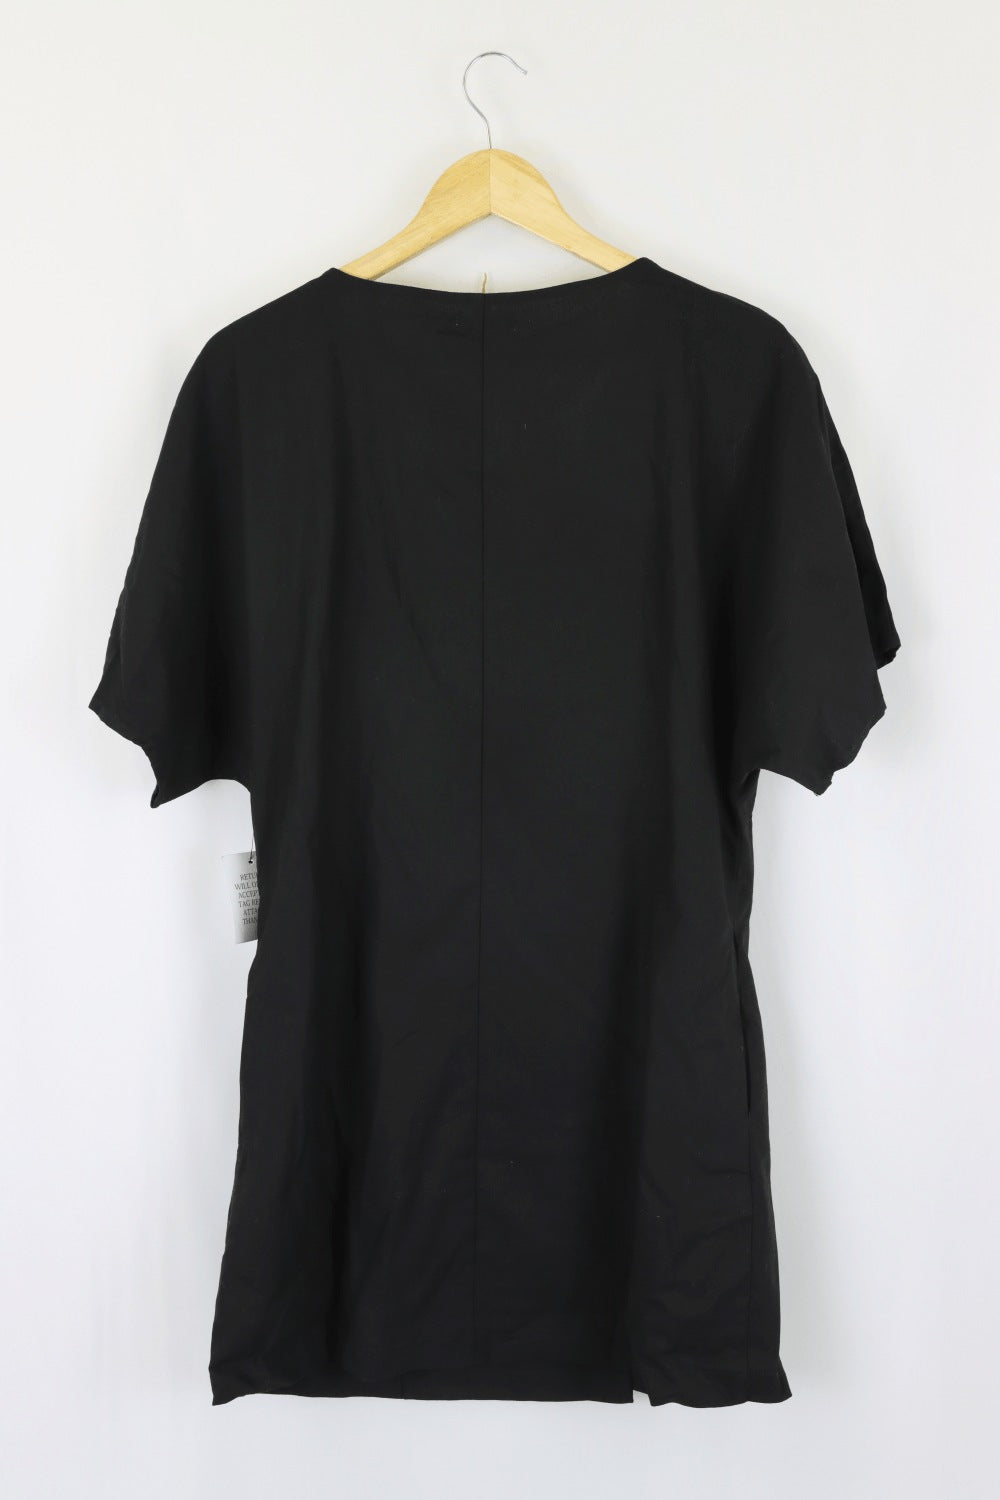 St Marlo Black Button Dress 12